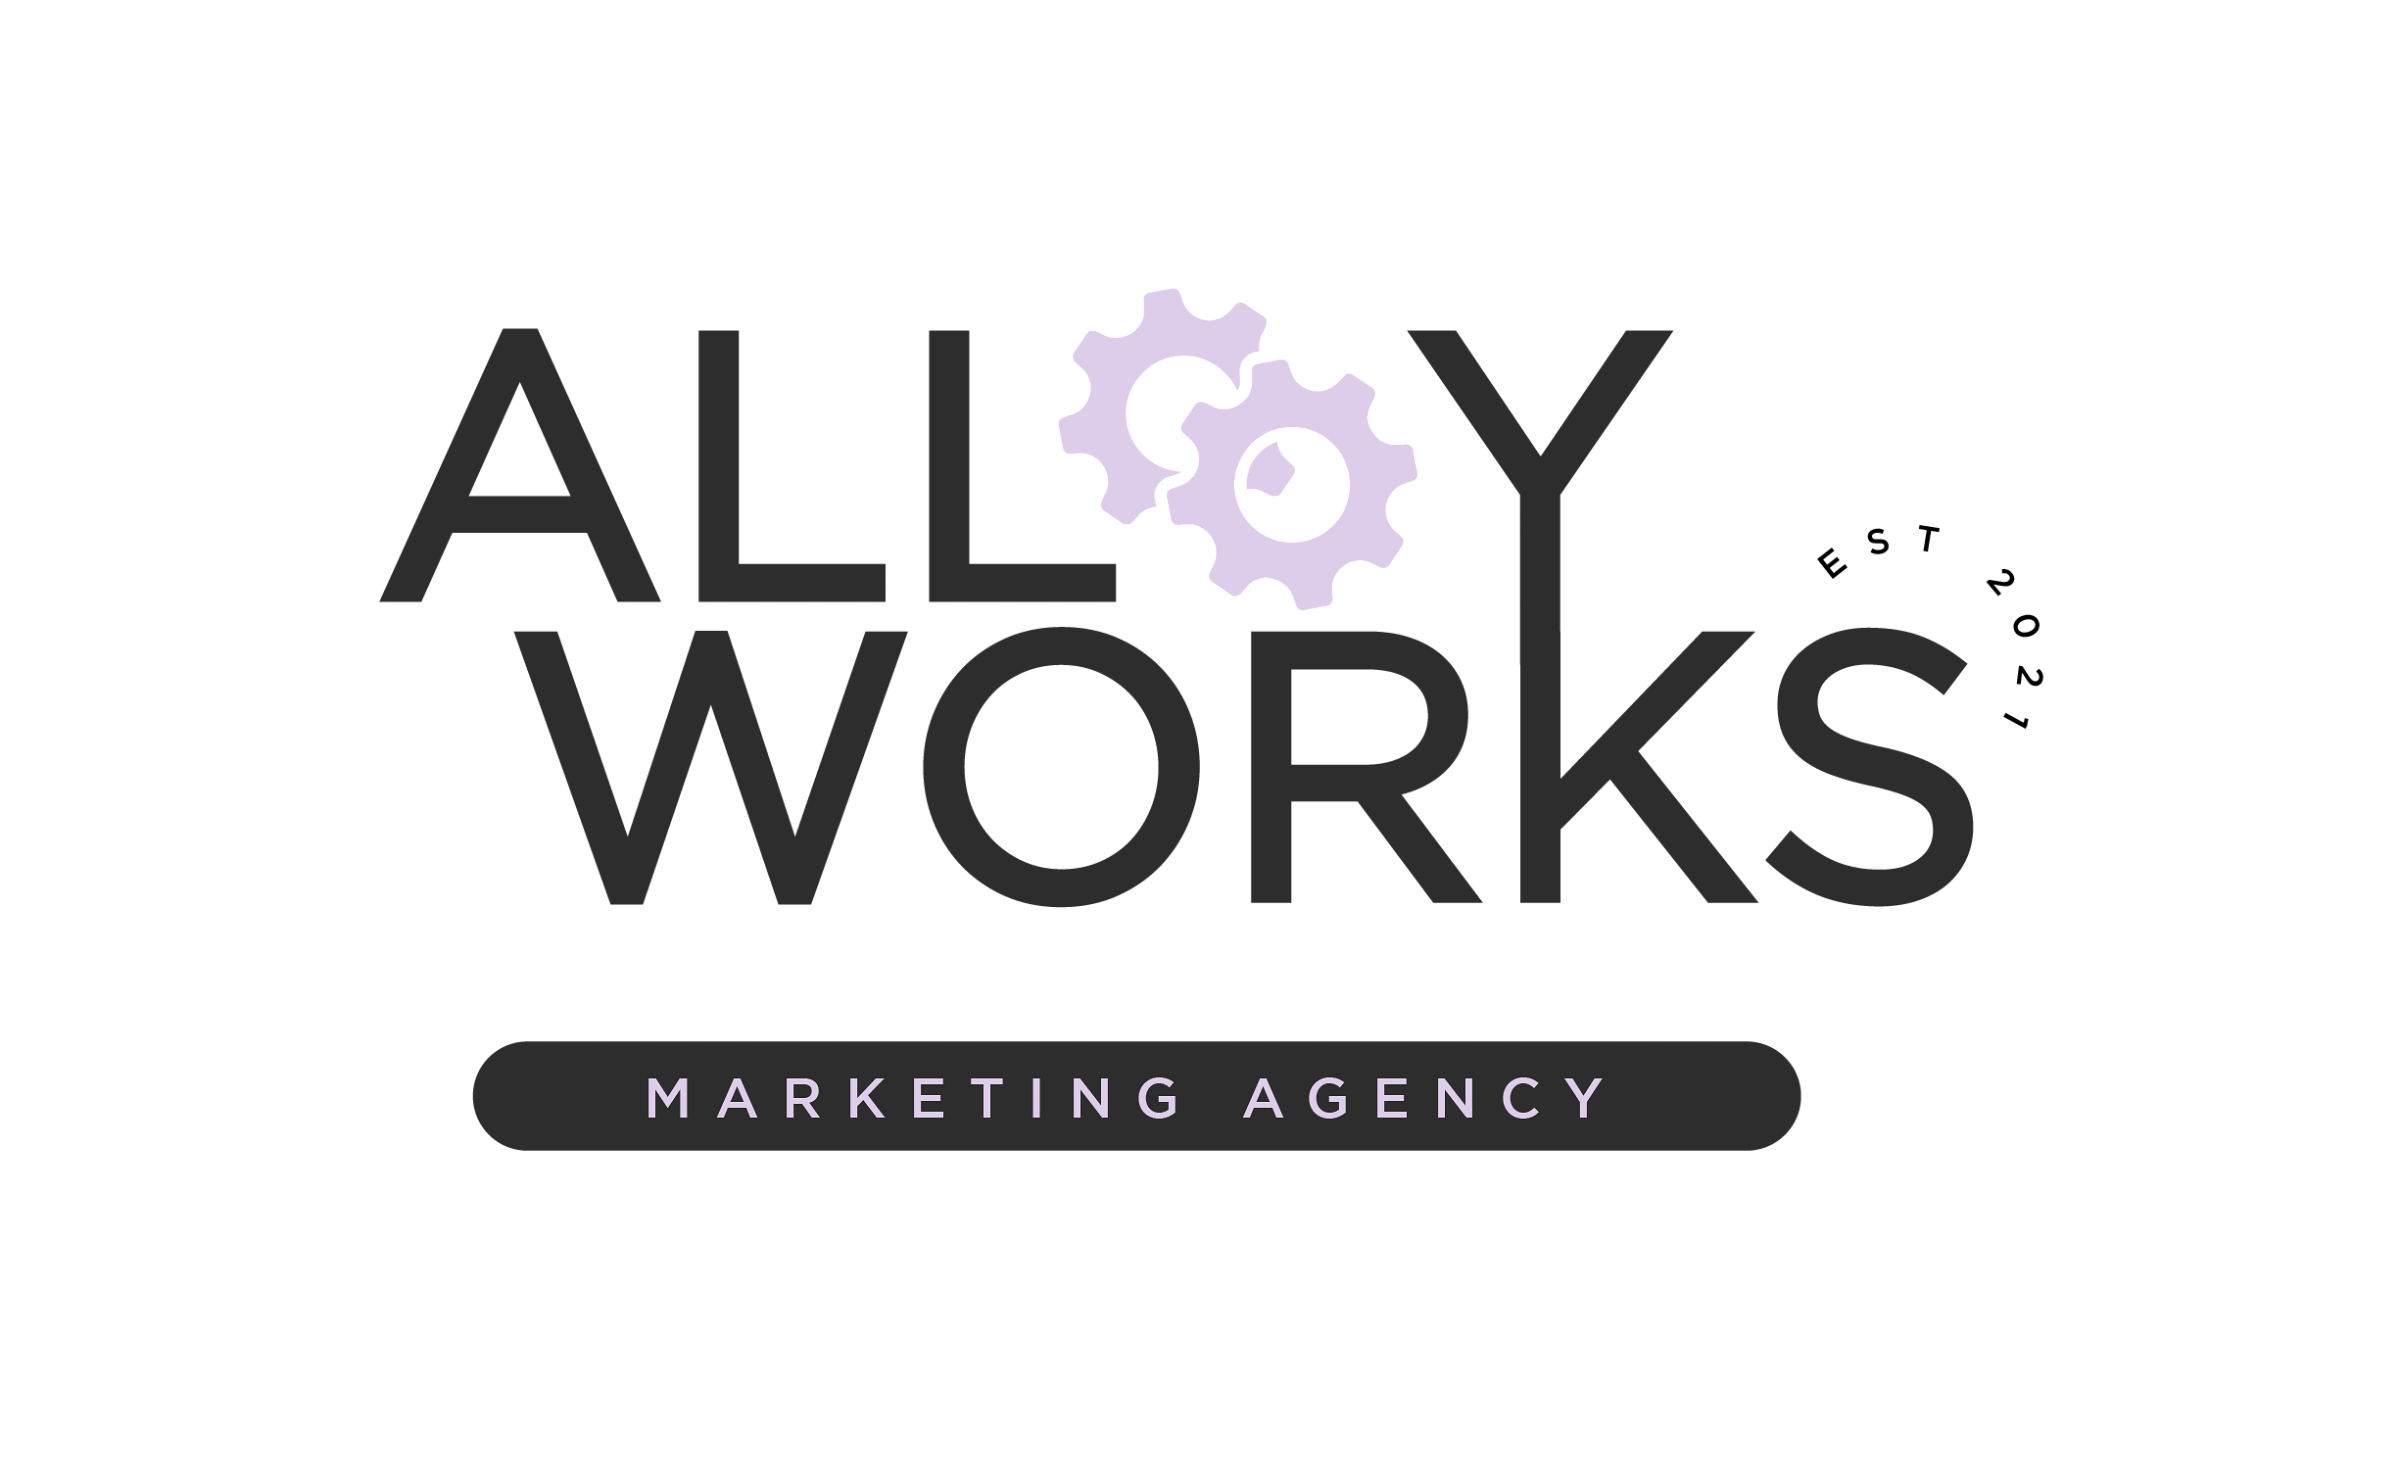 Alloy Works Marketing Agency